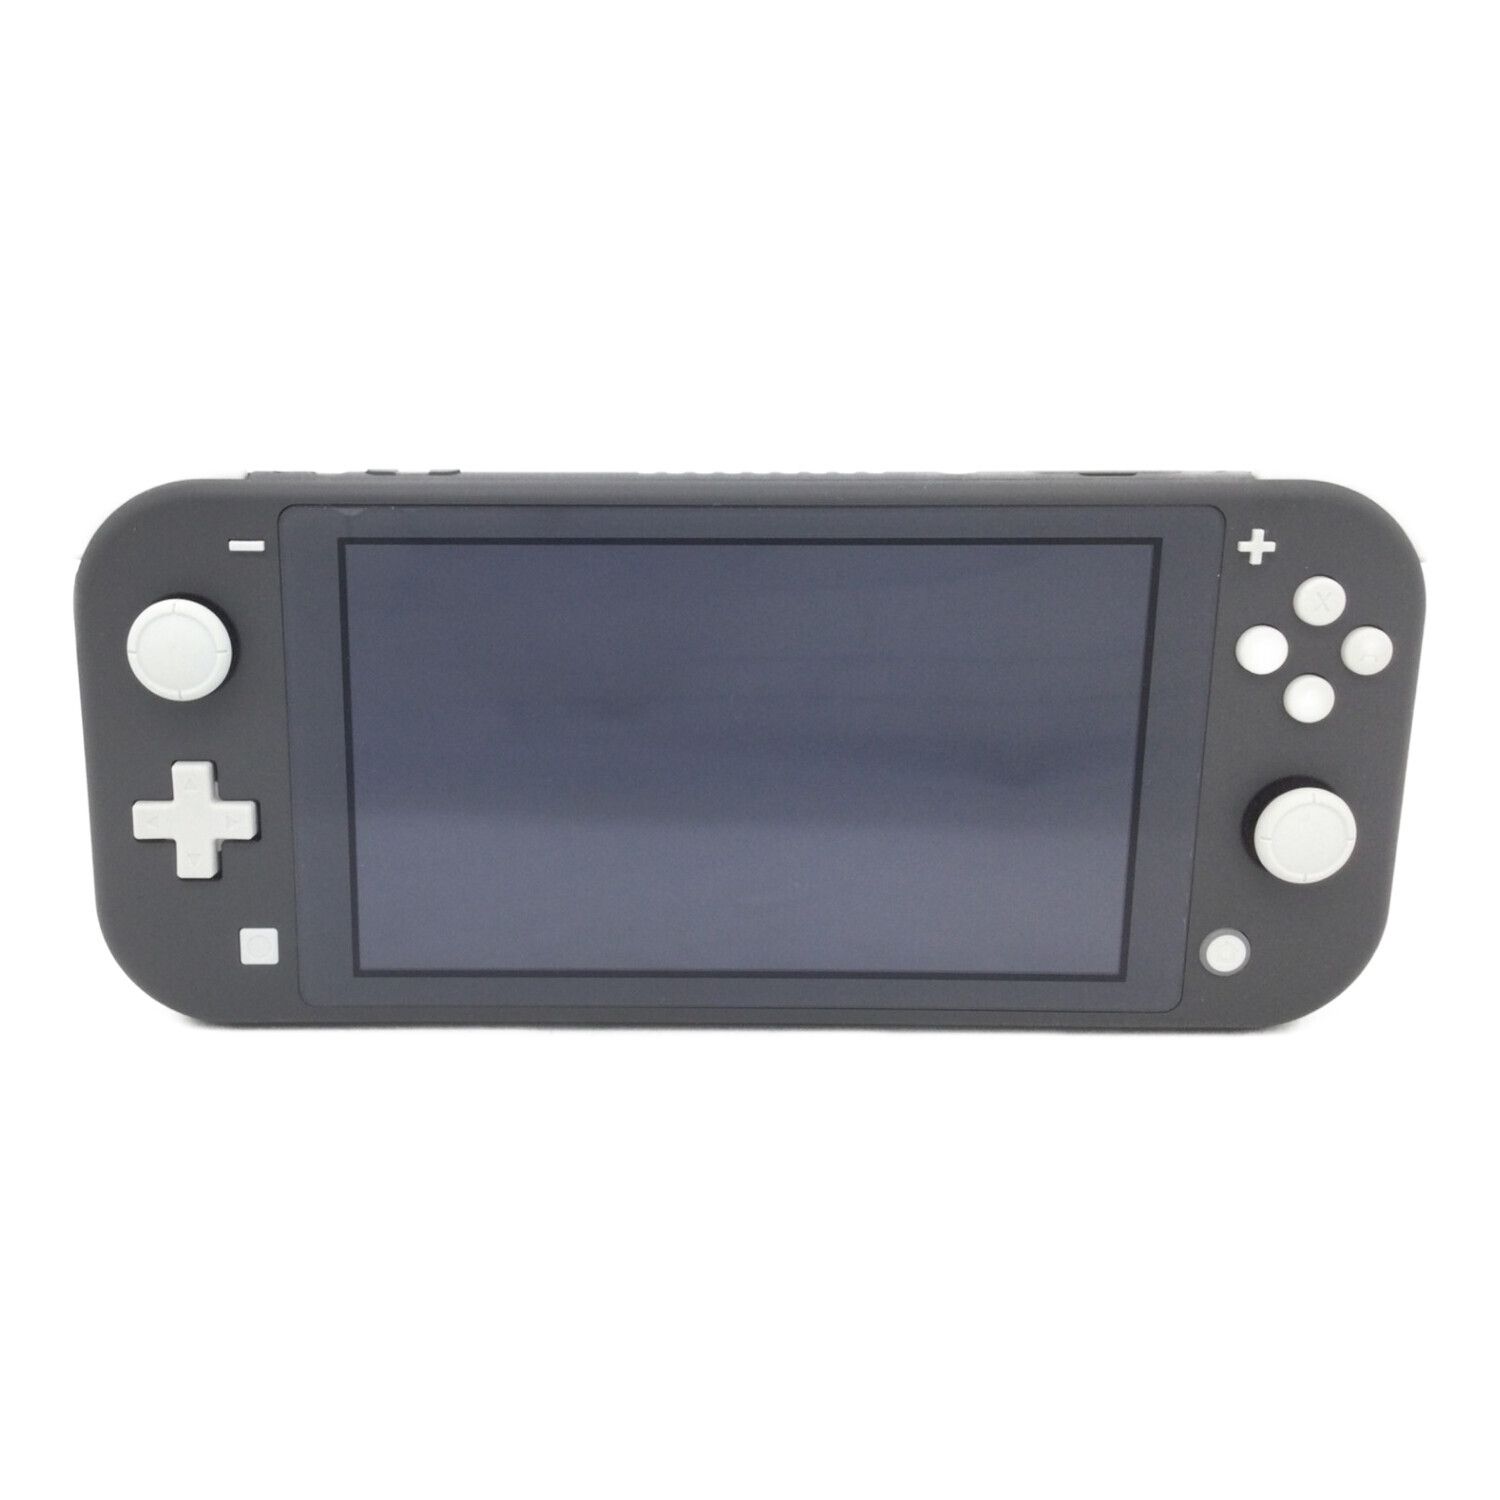 Nintendo (ニンテンドウ) Nintendo Switch Lite グレー HDH-001